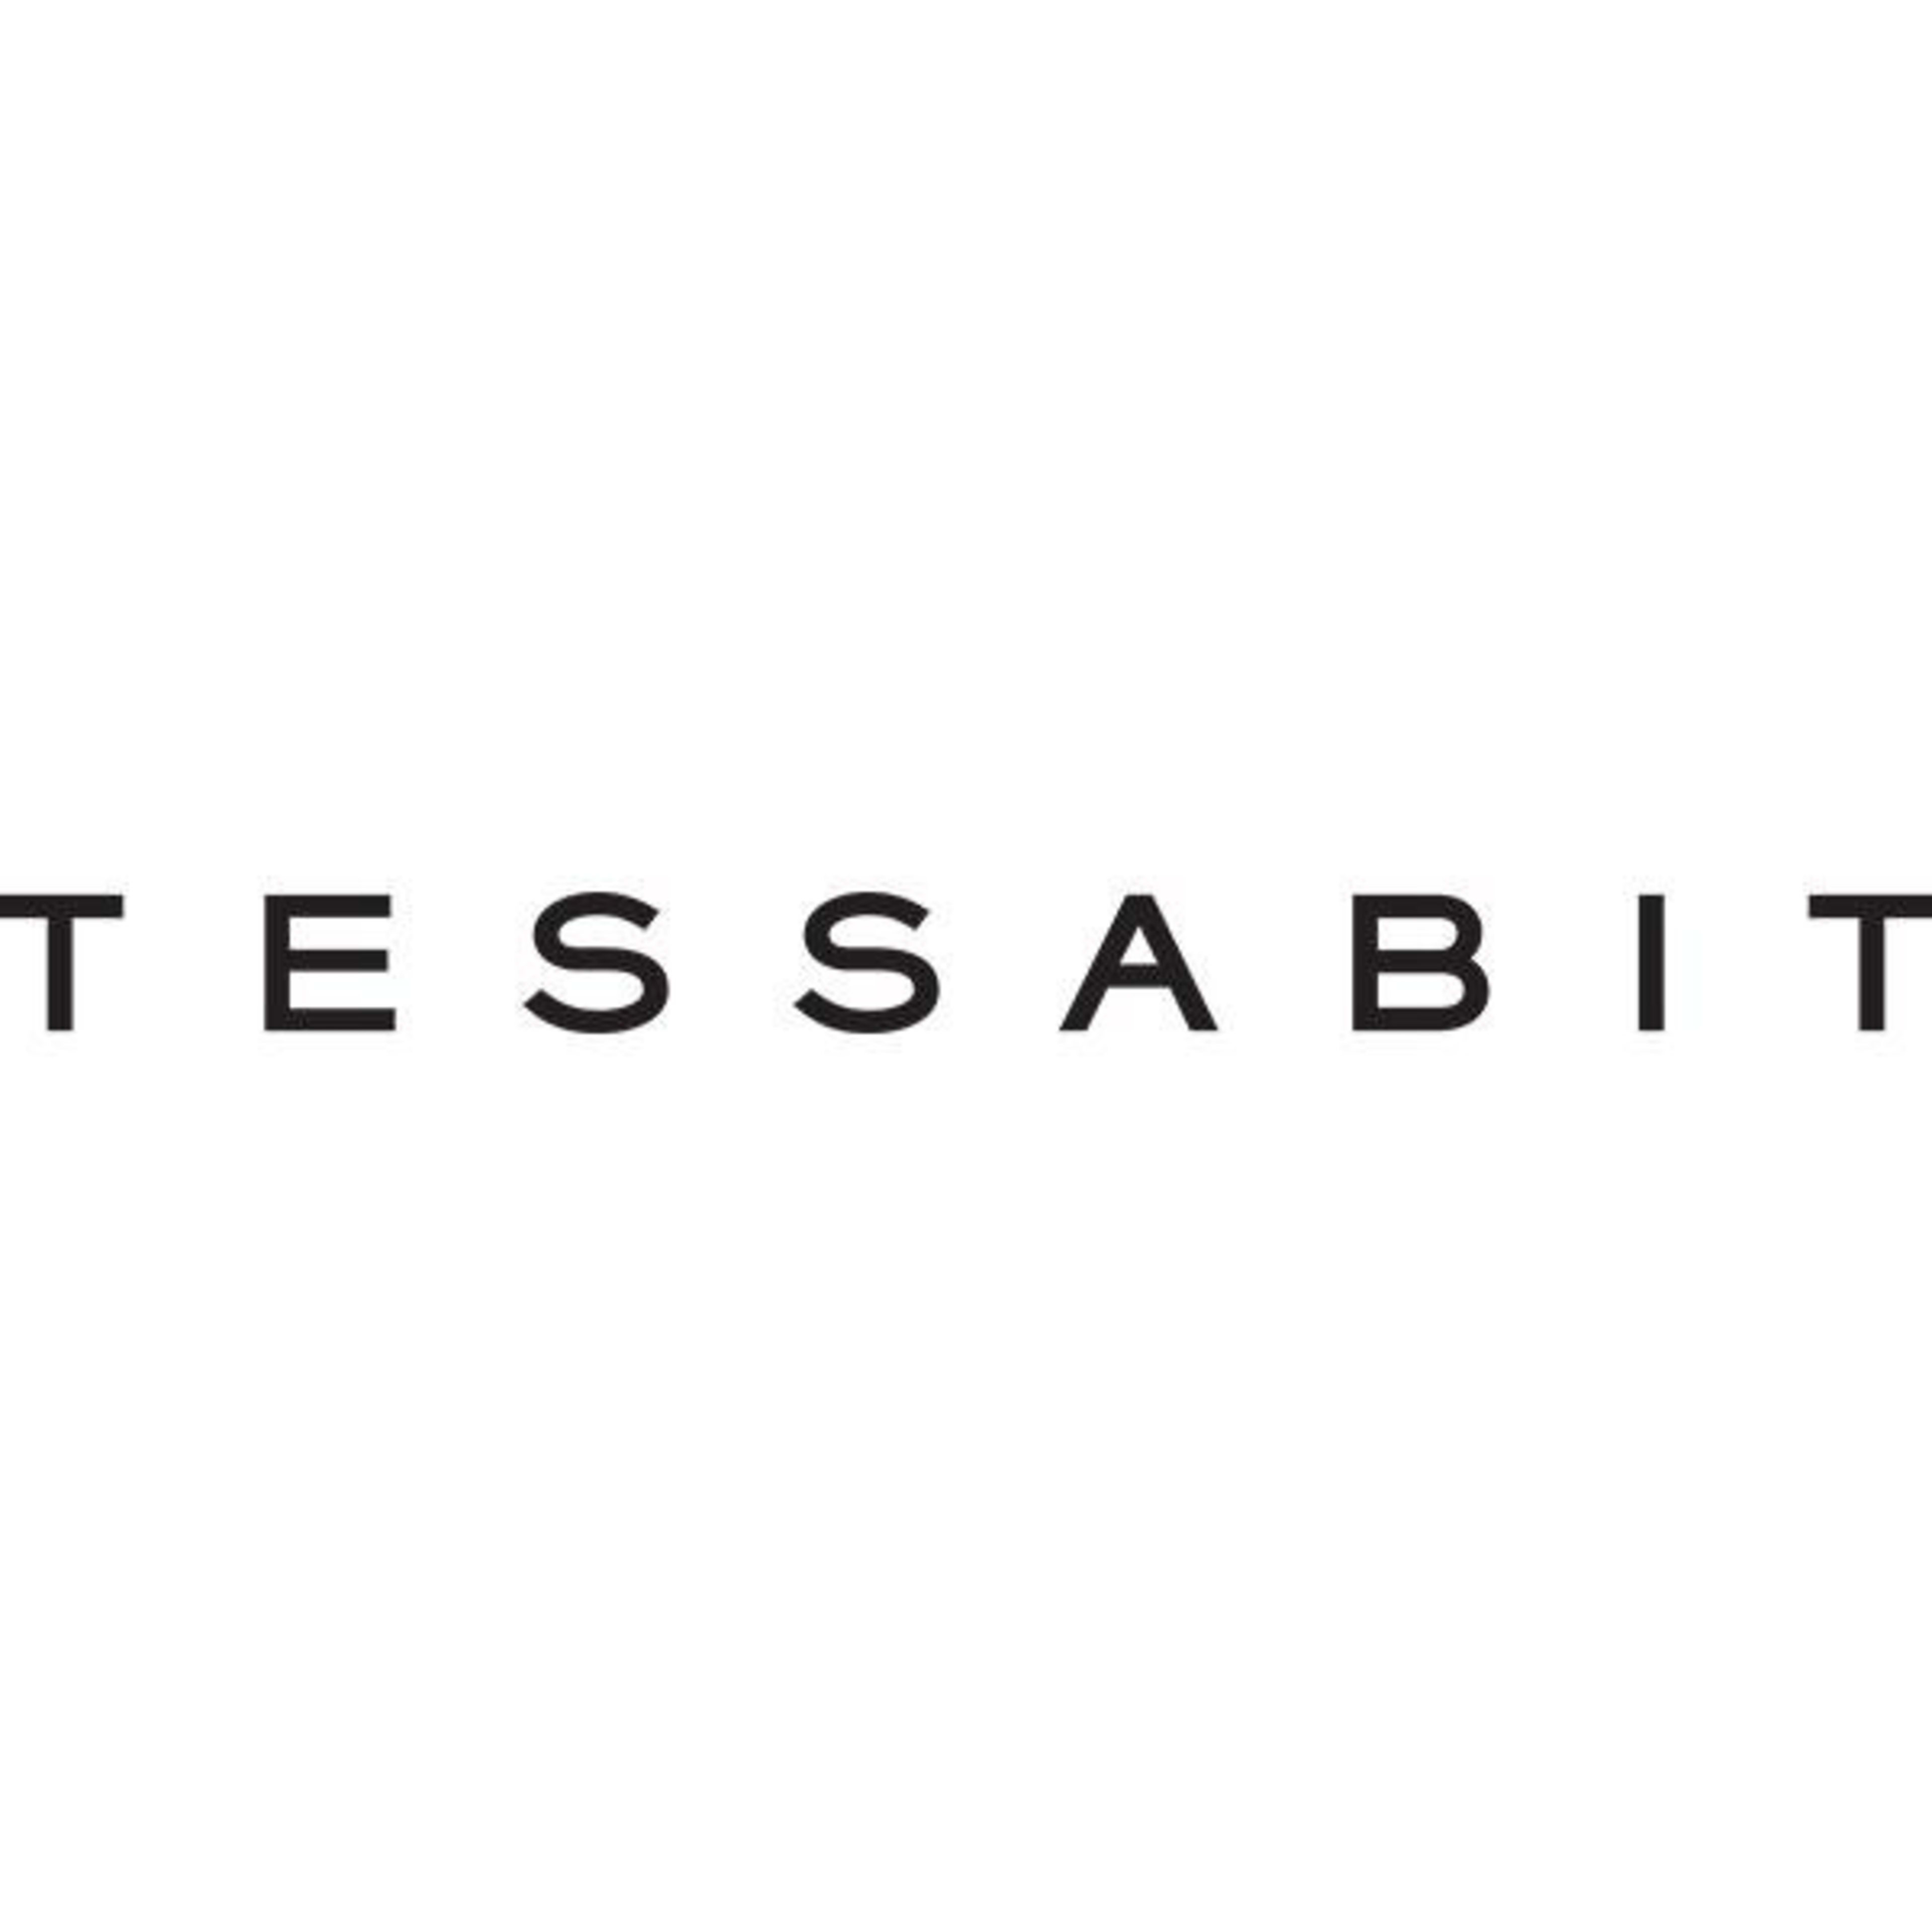 Tessabit Code